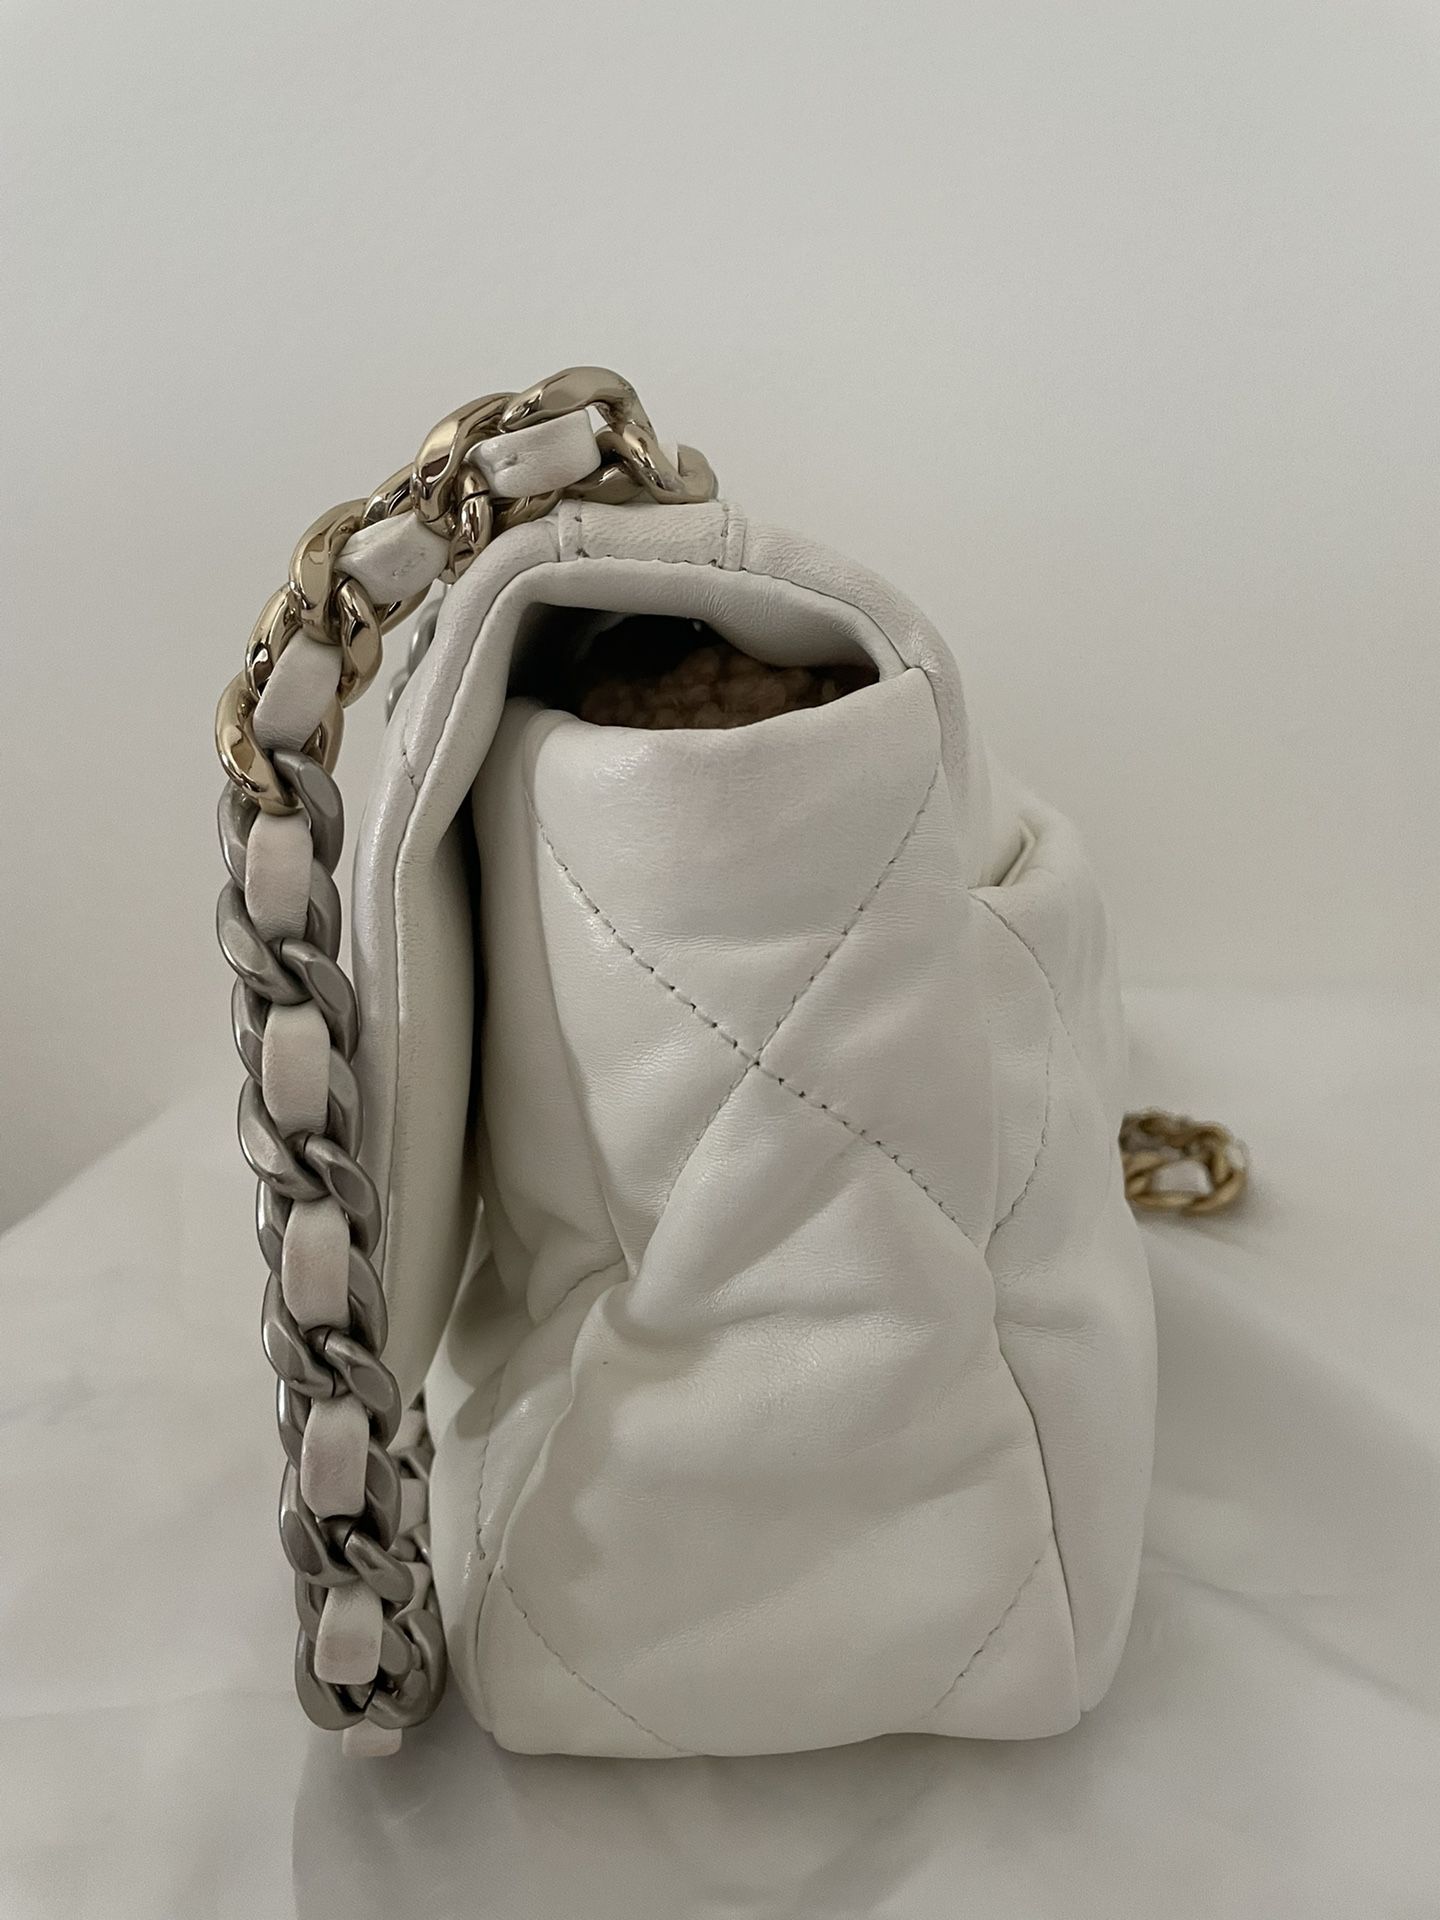 Chanel 19 Bag for Sale in Encinitas, CA - OfferUp